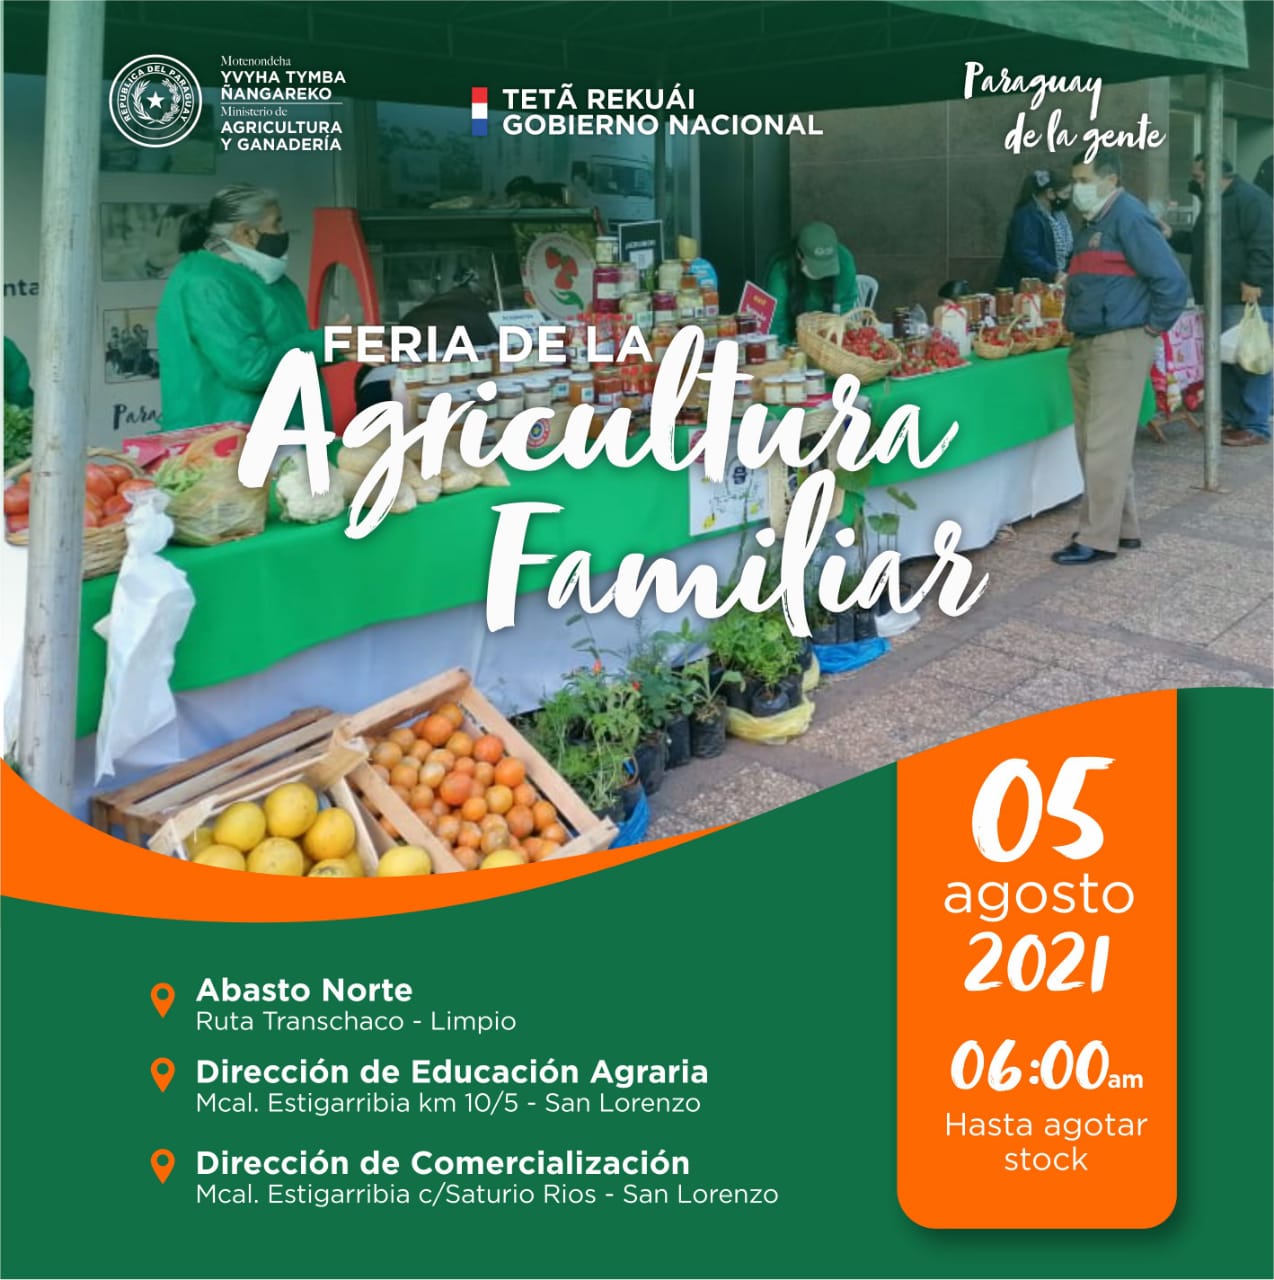 AgriculturaFamiliar_2021-08-05